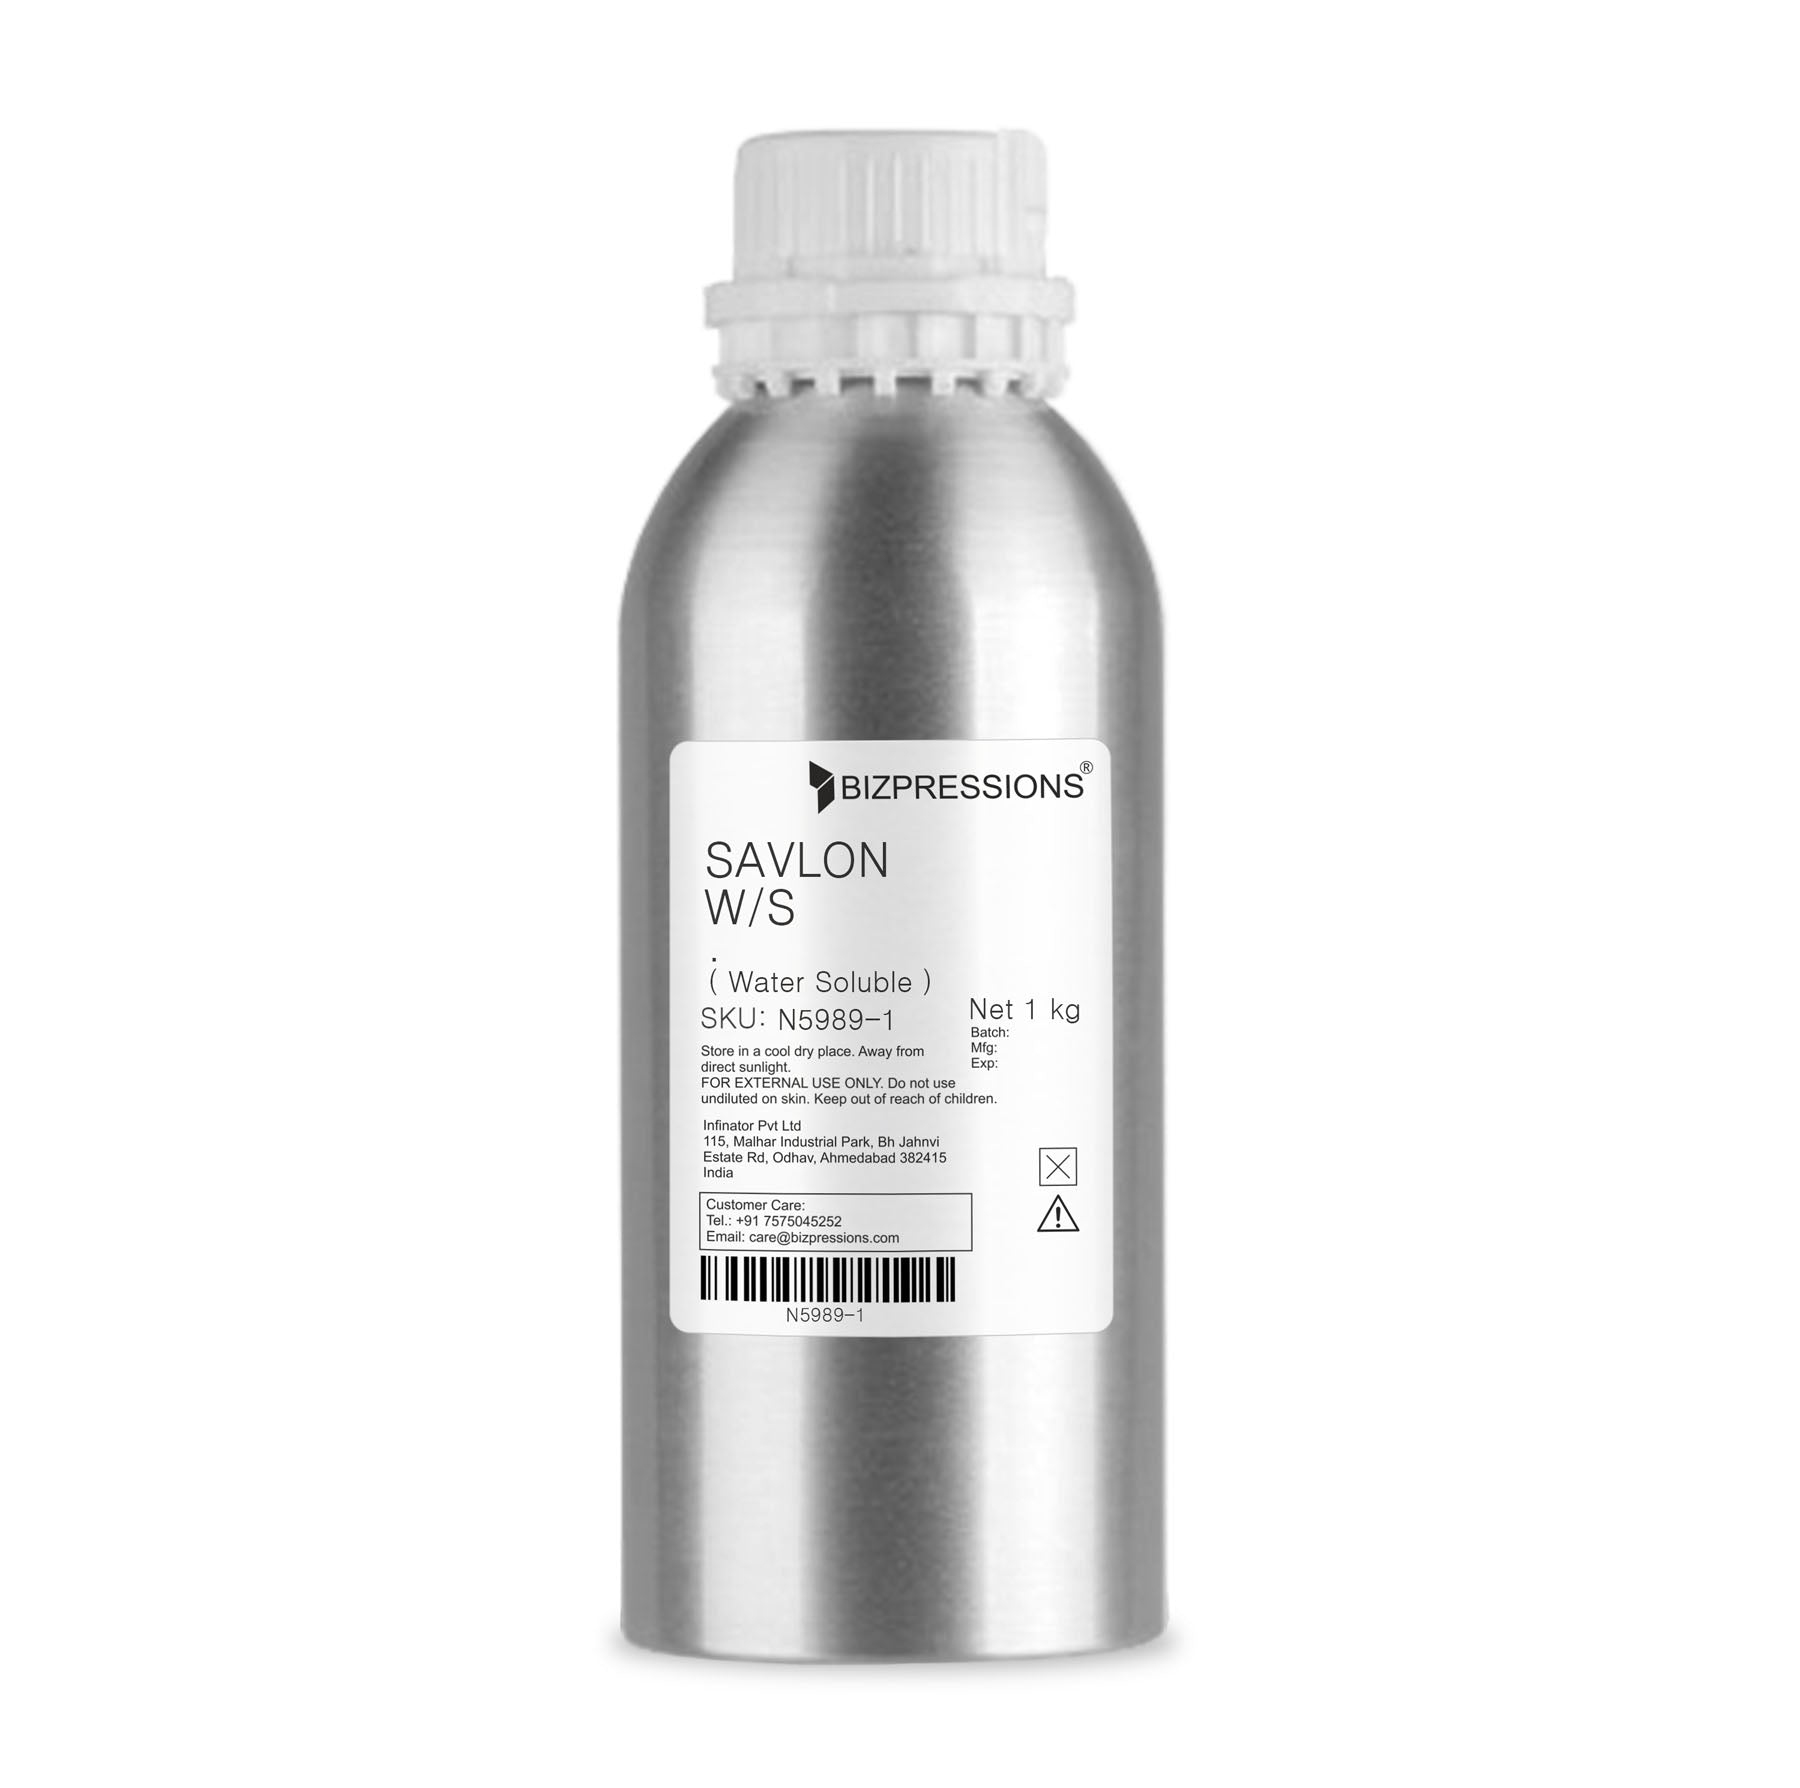 SAVLON W/S - Fragrance ( Water Soluble )